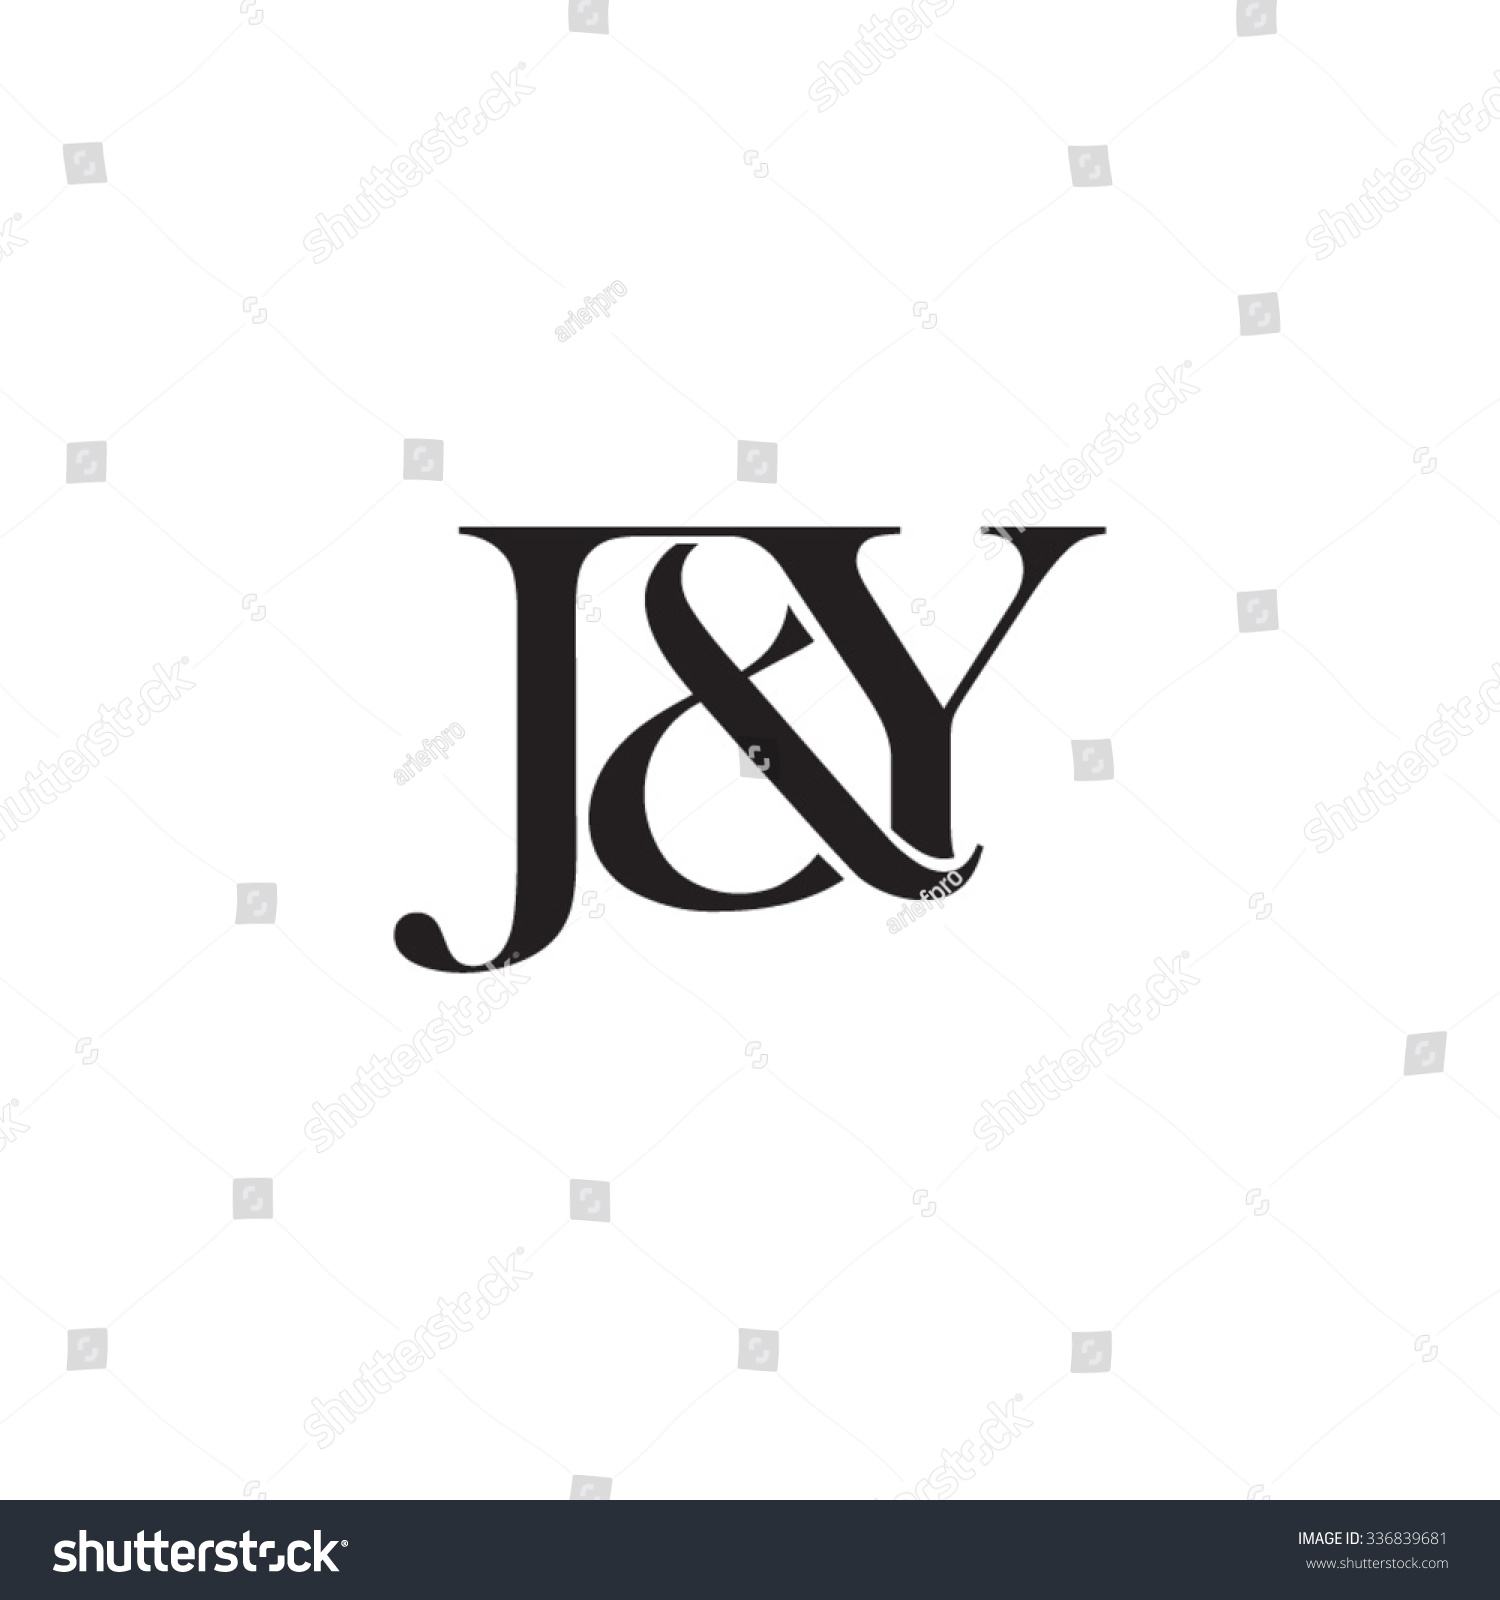 Jy Initial Logo Ampersand Monogram Logo Stock Vector Royalty Free